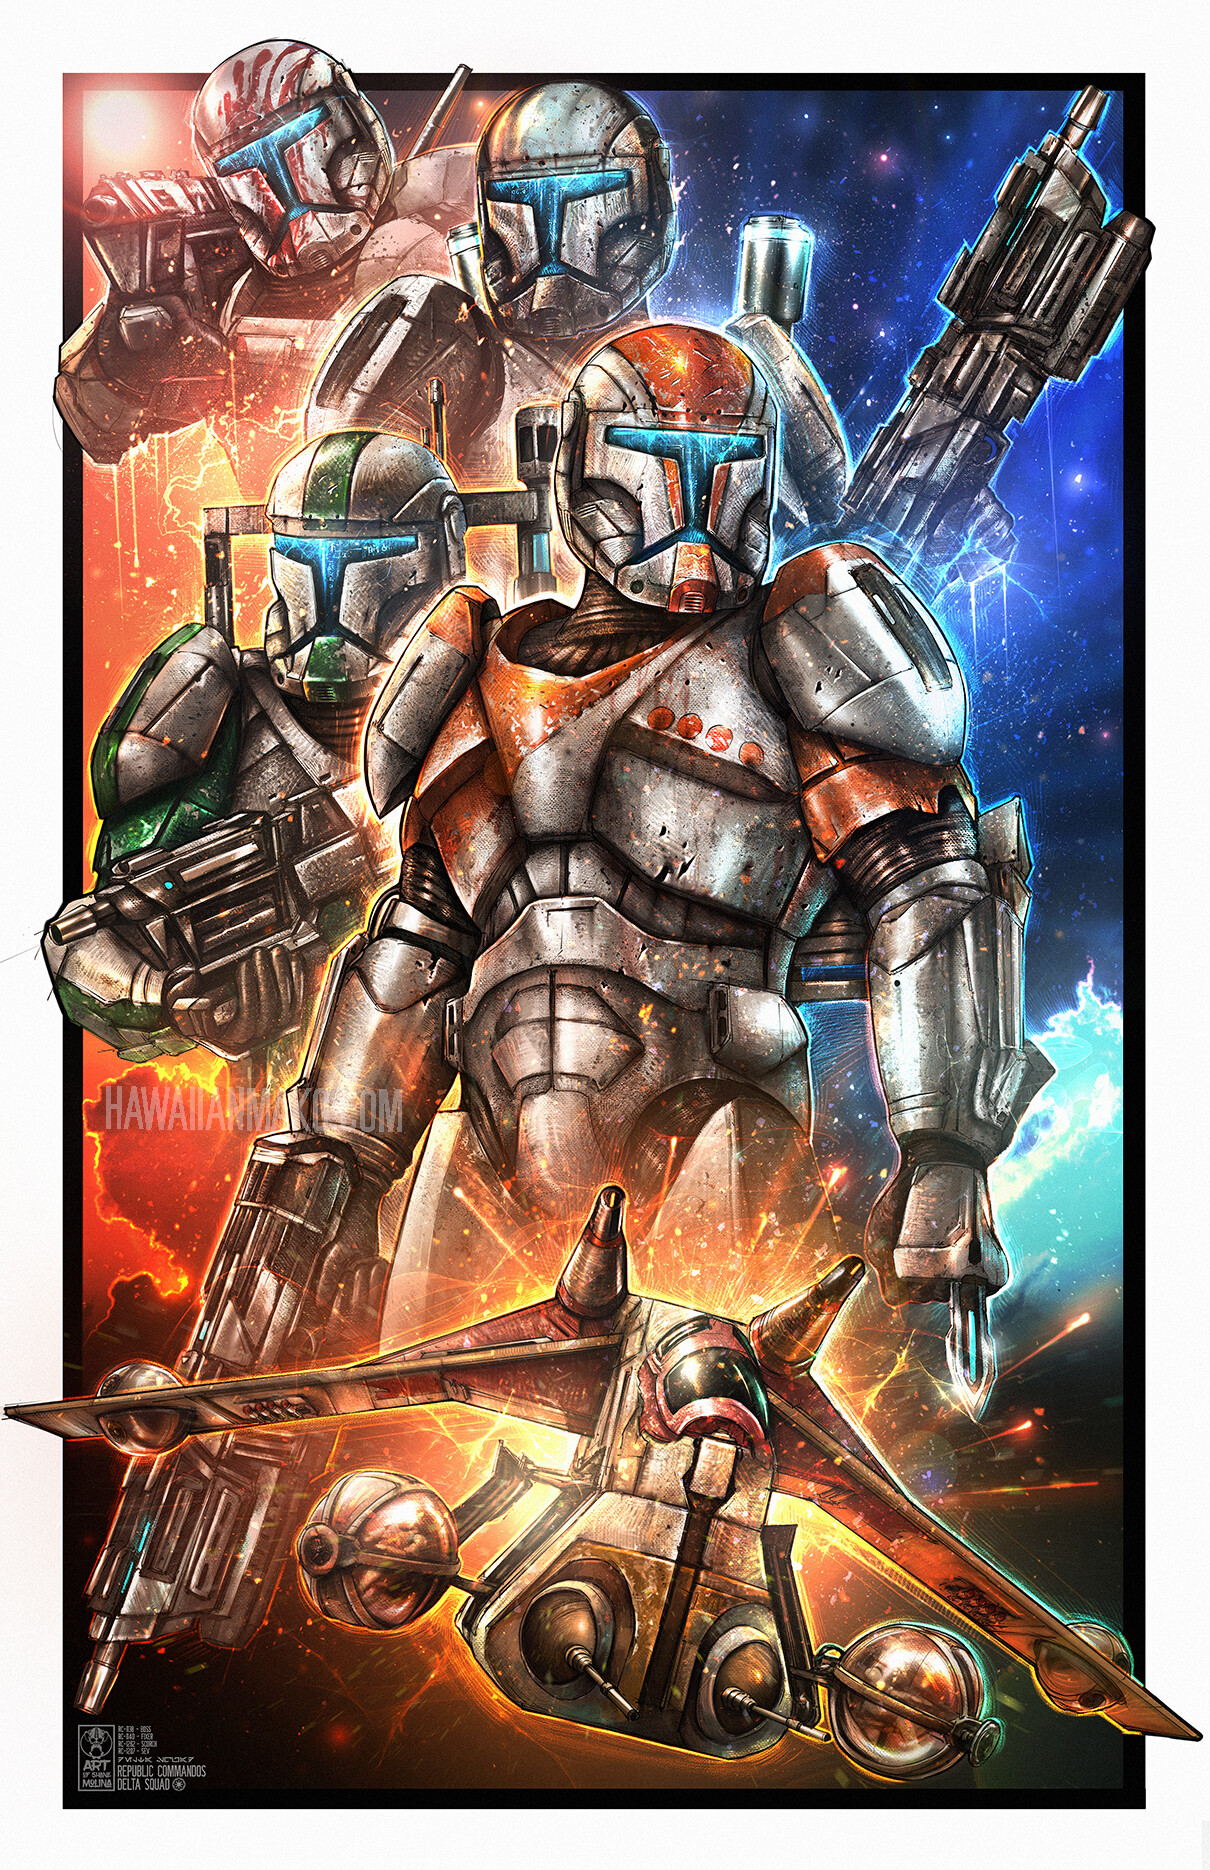 Star Wars: Republic Commando Art by Shane Molina